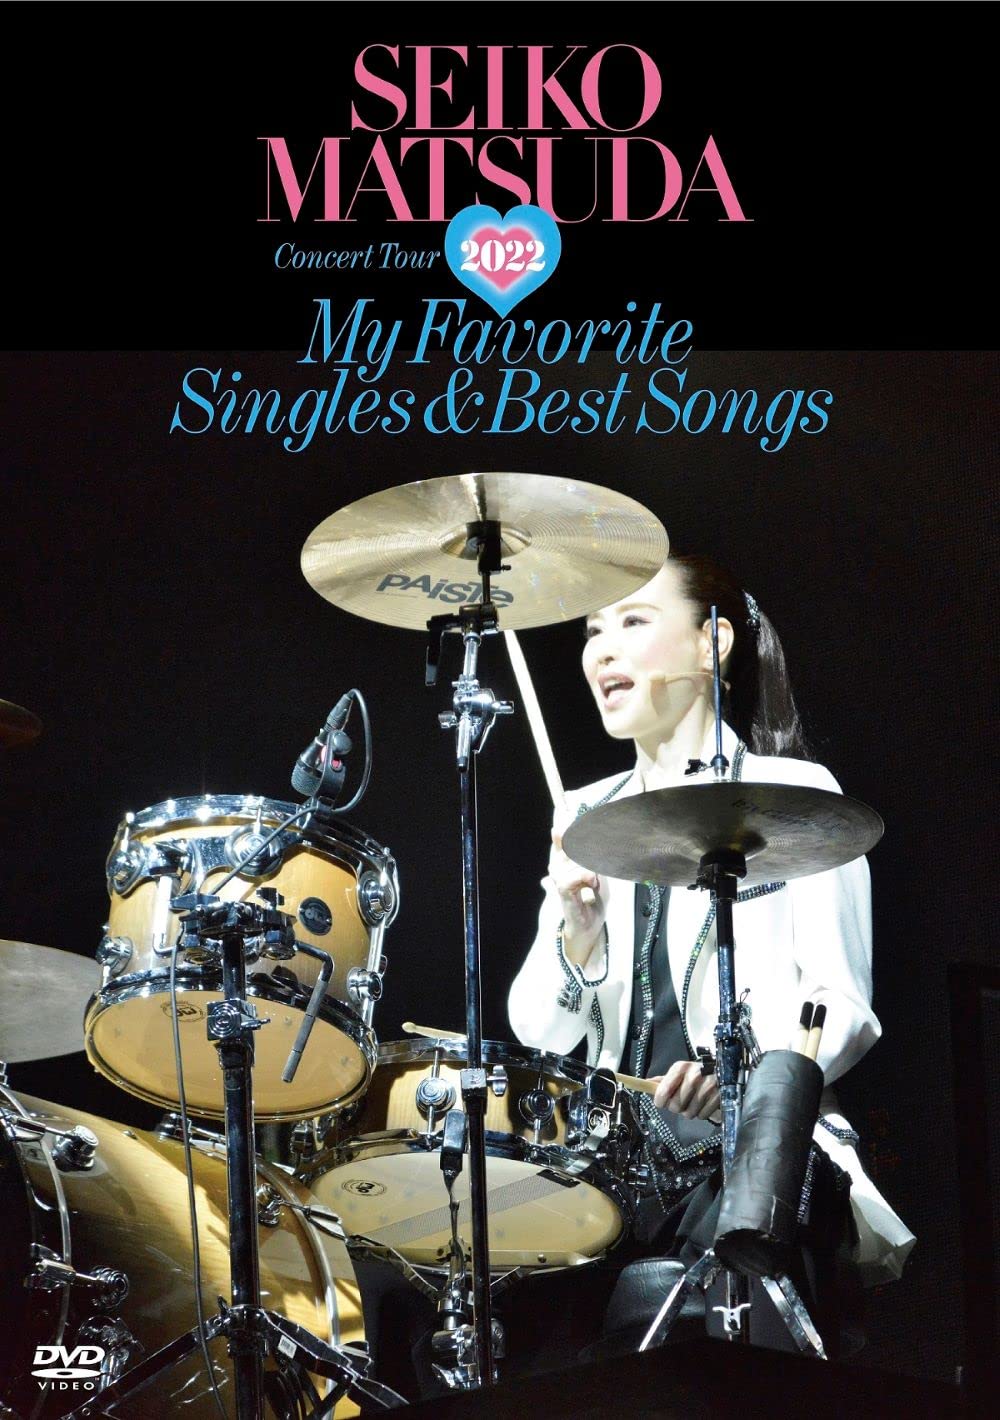 Seiko Matsuda Concert Tour 2022 My Favorite Singles & Best Songs at Saitama Super Arena (初回限定盤)(CD付) [DVD]